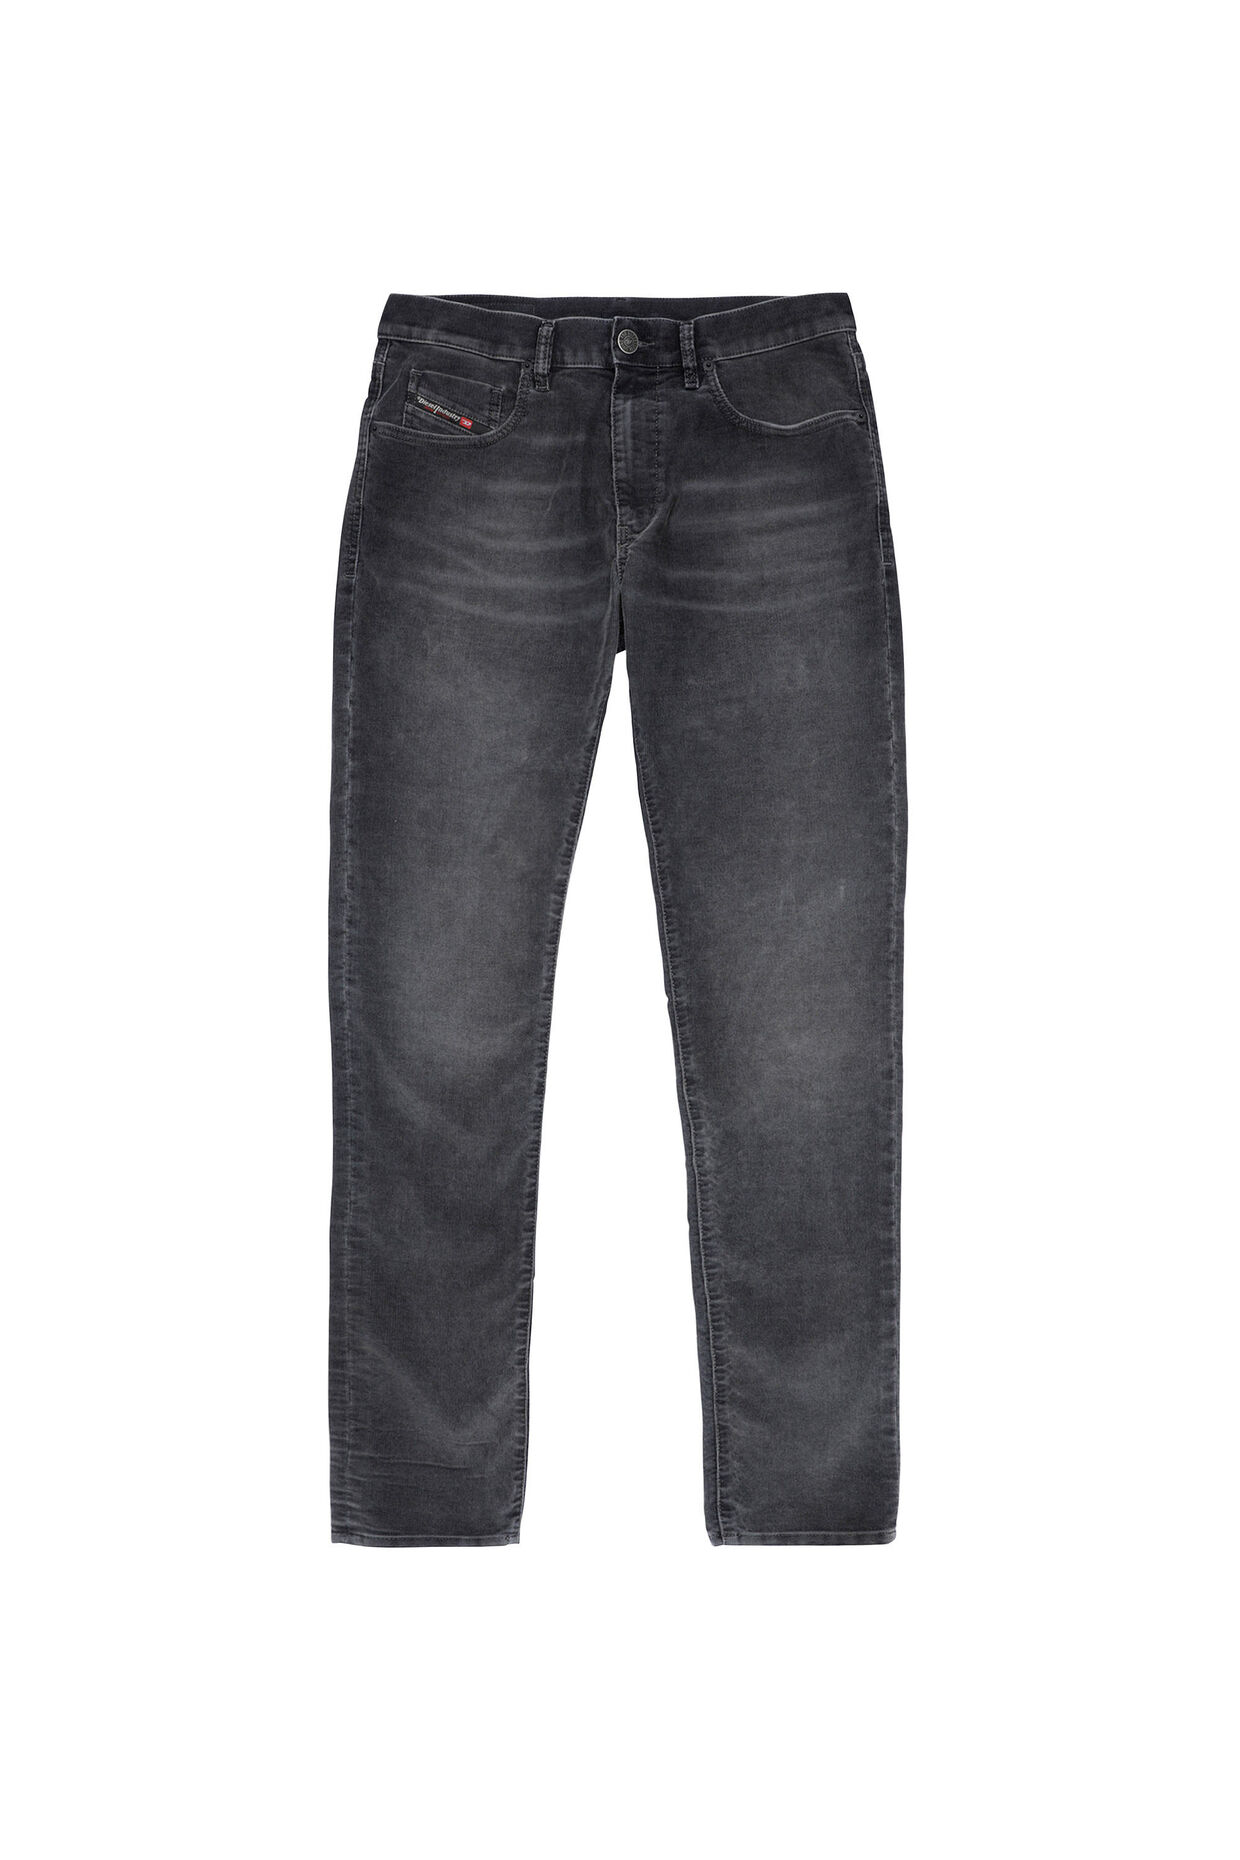 Mens Jeans | Buy Denim Blue Jeans: LTB, Diesel, Marvi & More